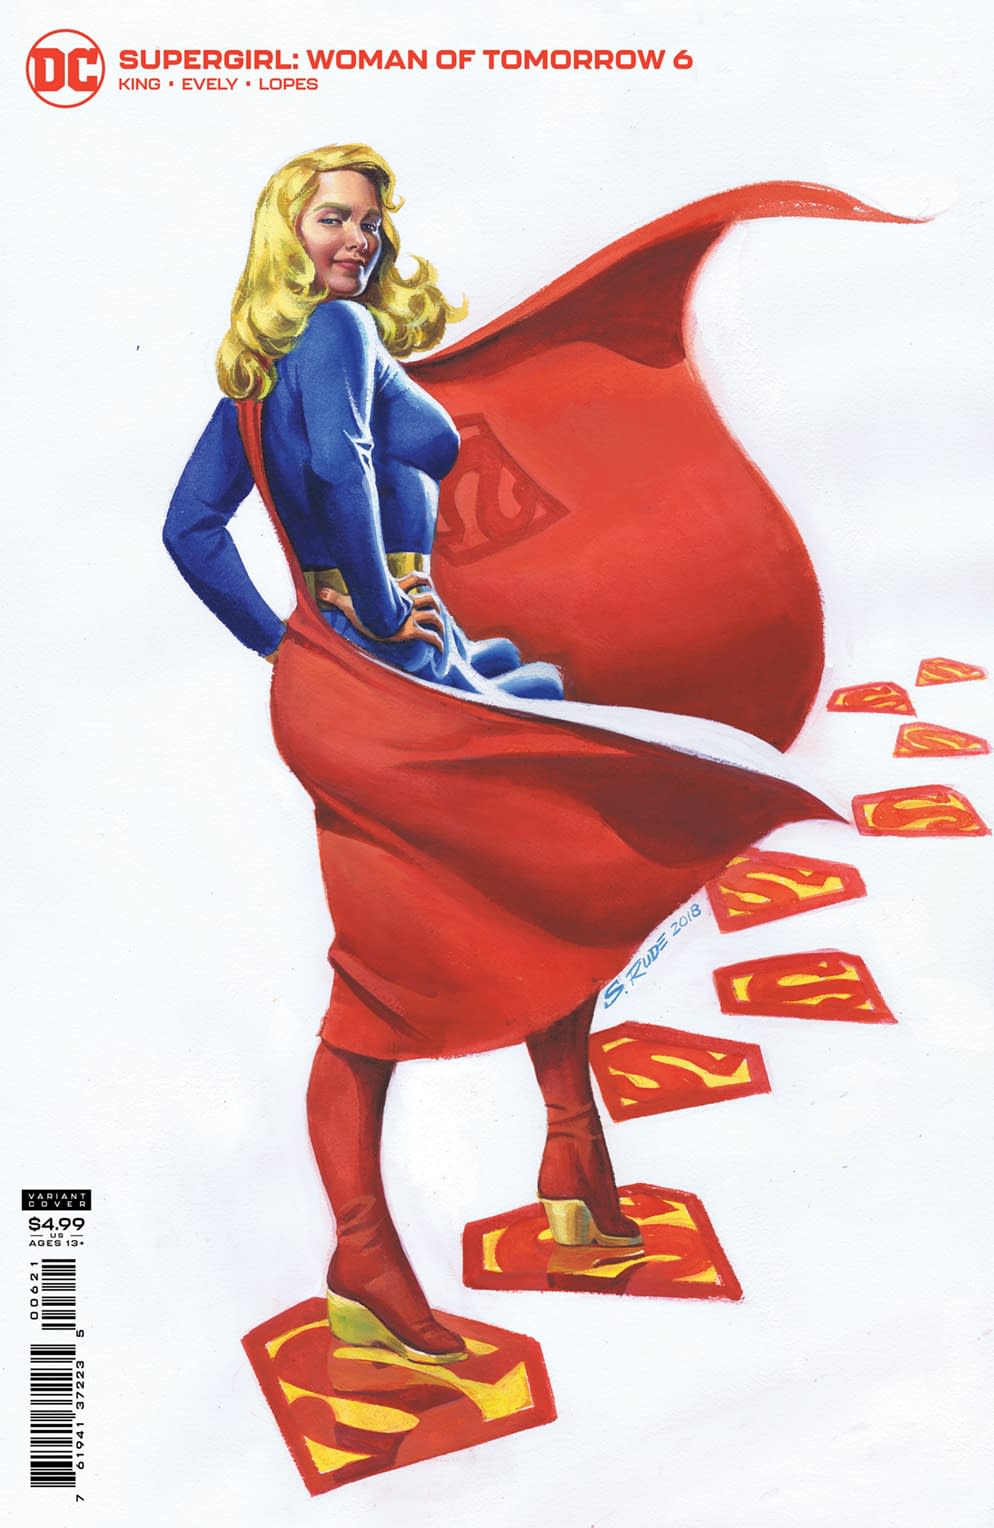 Supergirl: Woman of Tomorrow #6 Review | The Aspiring Kryptonian